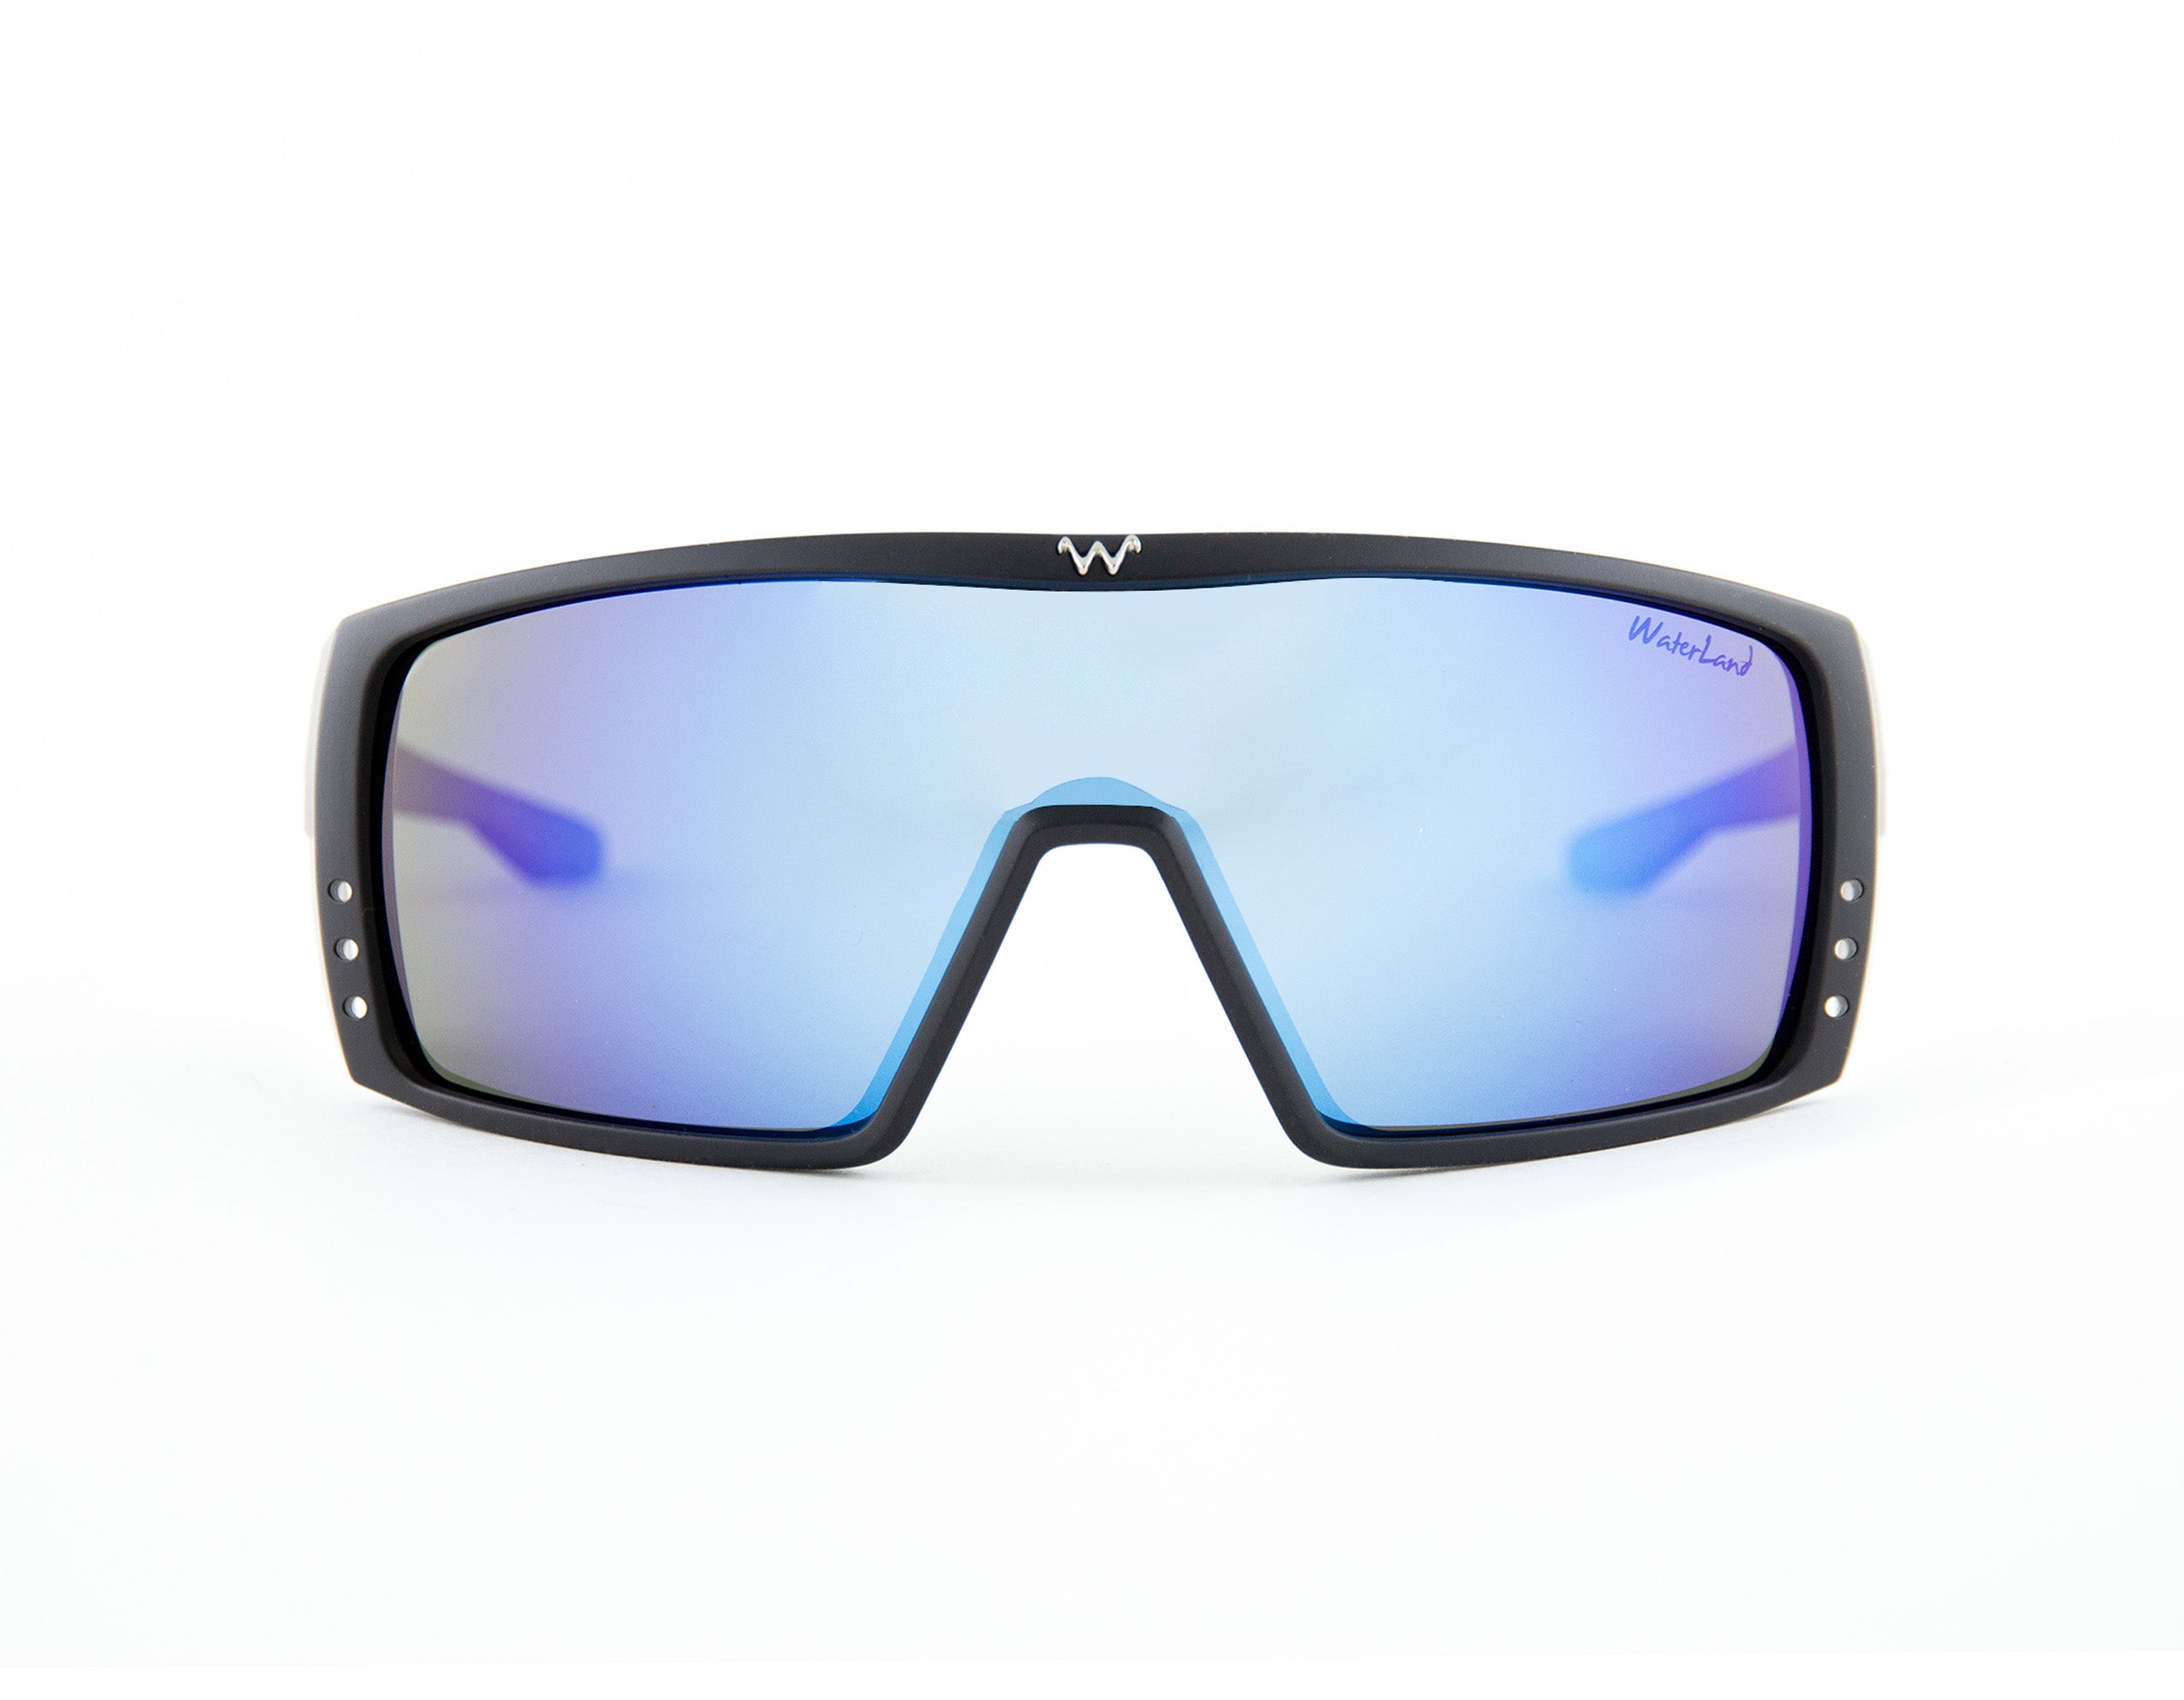 Waterland Sobro Sunglasses Brown Tortoise/Blue Mirro